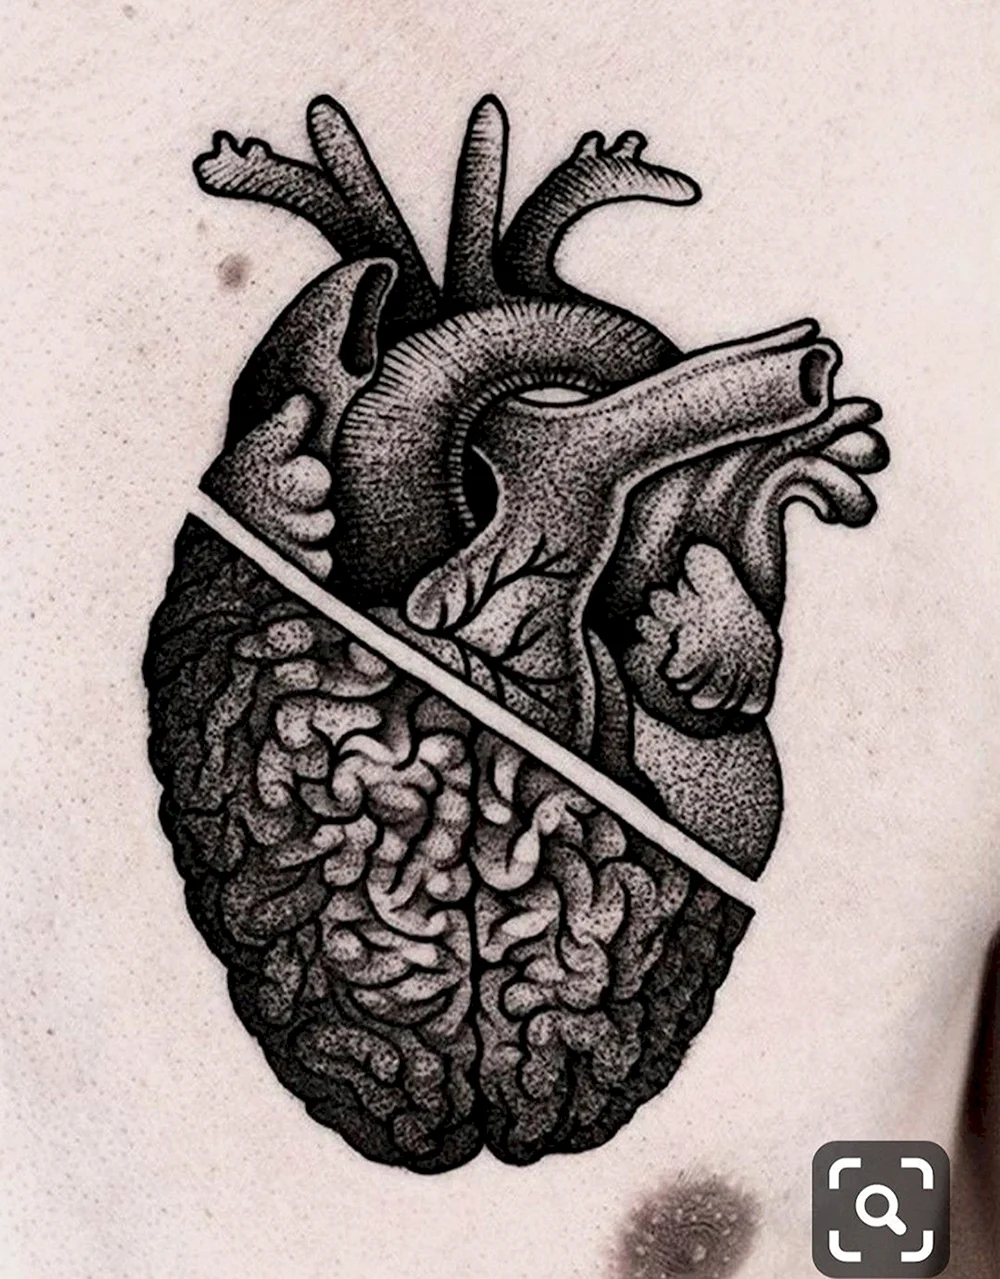 Heart and Brain Tattoo